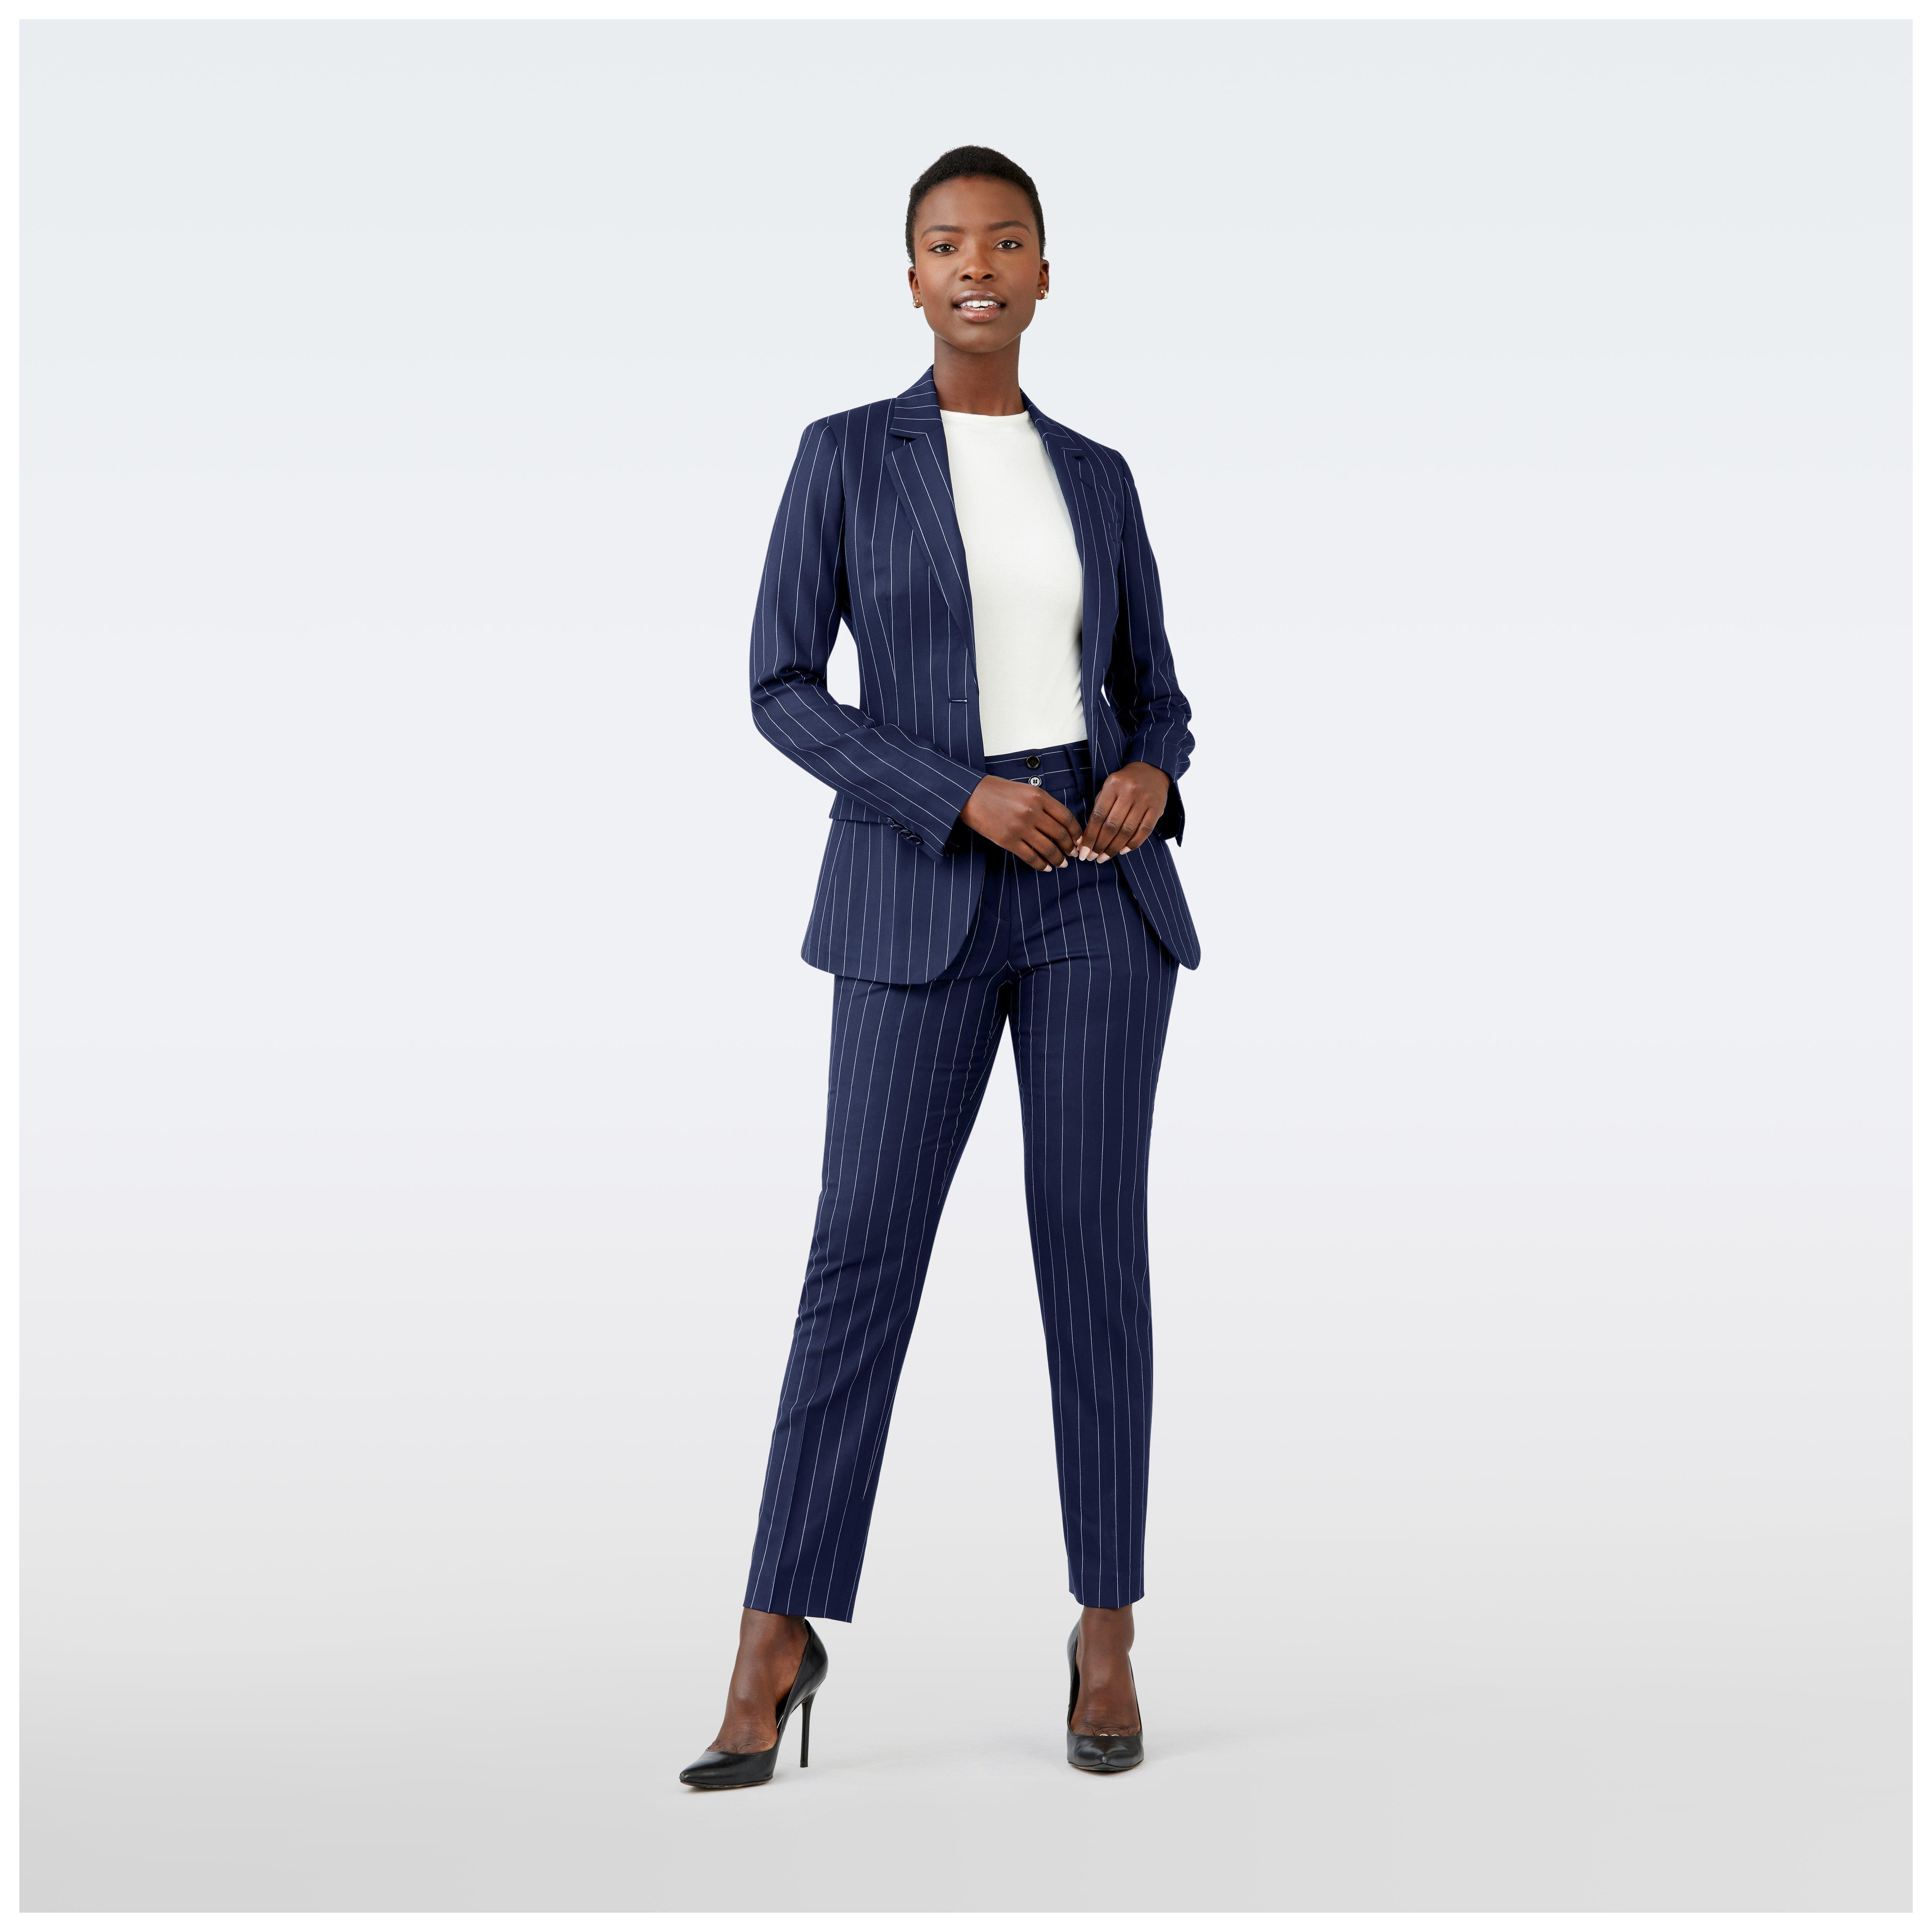 Womens Suits & Blazers 2021 Women Black White Striped Set Broad Shoulder  Blazer Slim Jacket Pants Casual Office Lady Elegant S S896 From Berniceone,  $66.95 | DHgate.Com